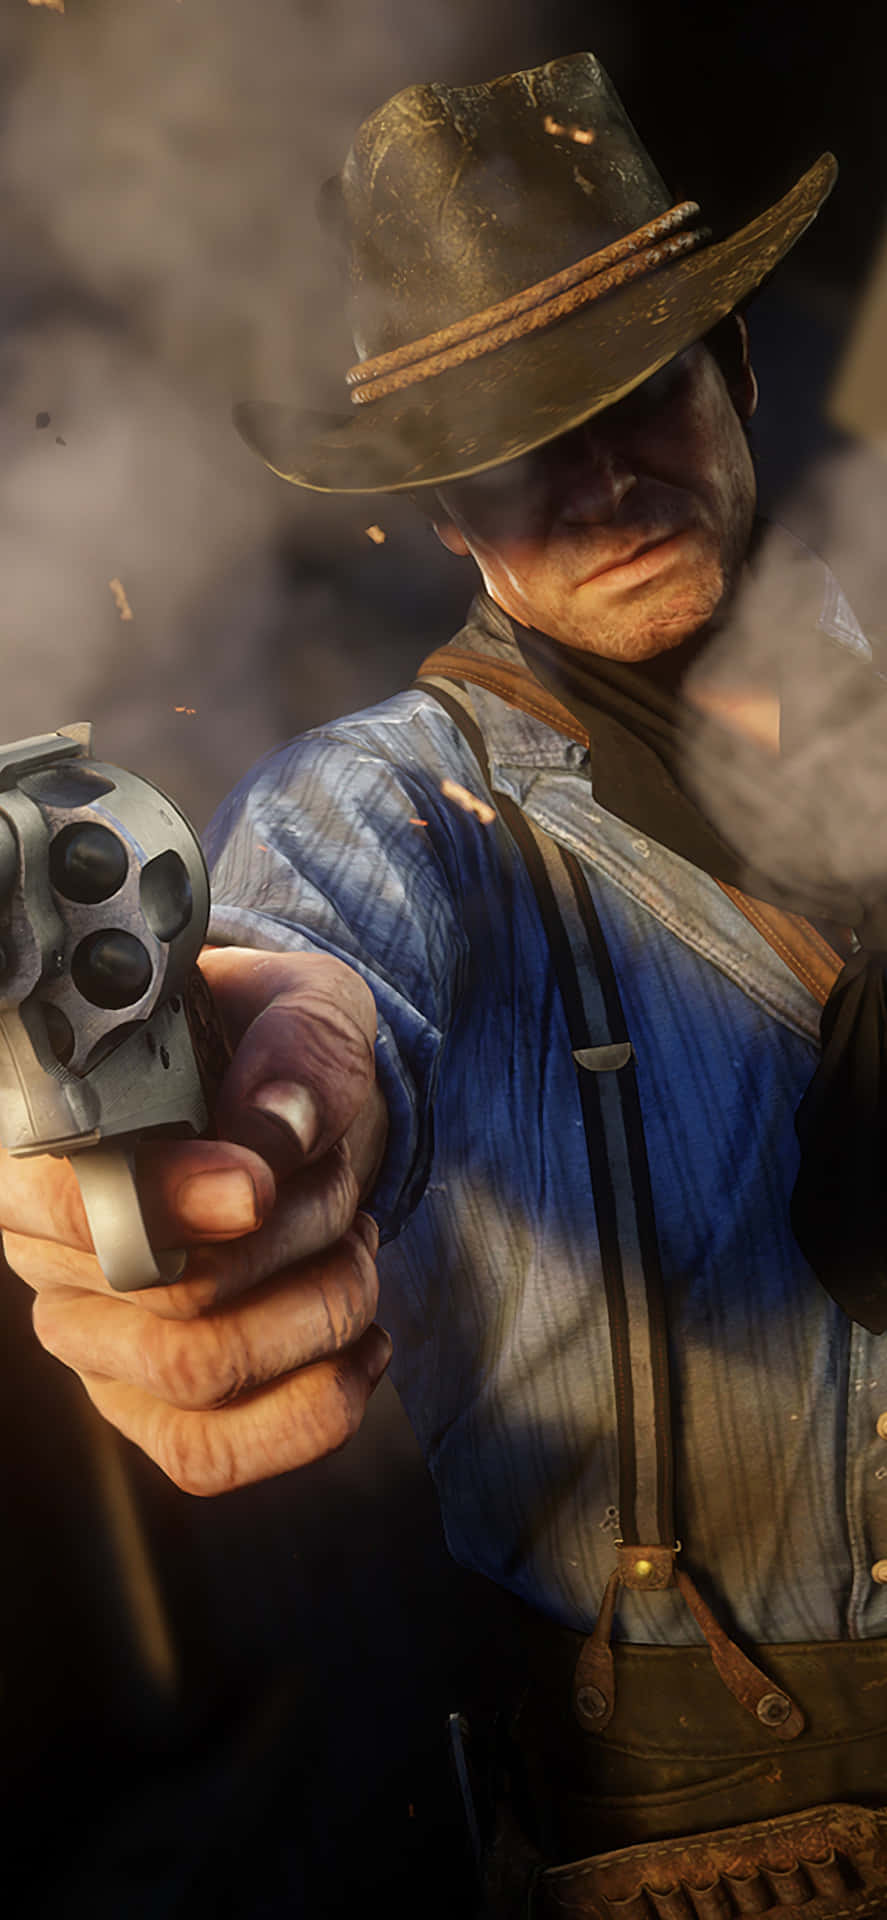 a man in a cowboy hat is holding a gun